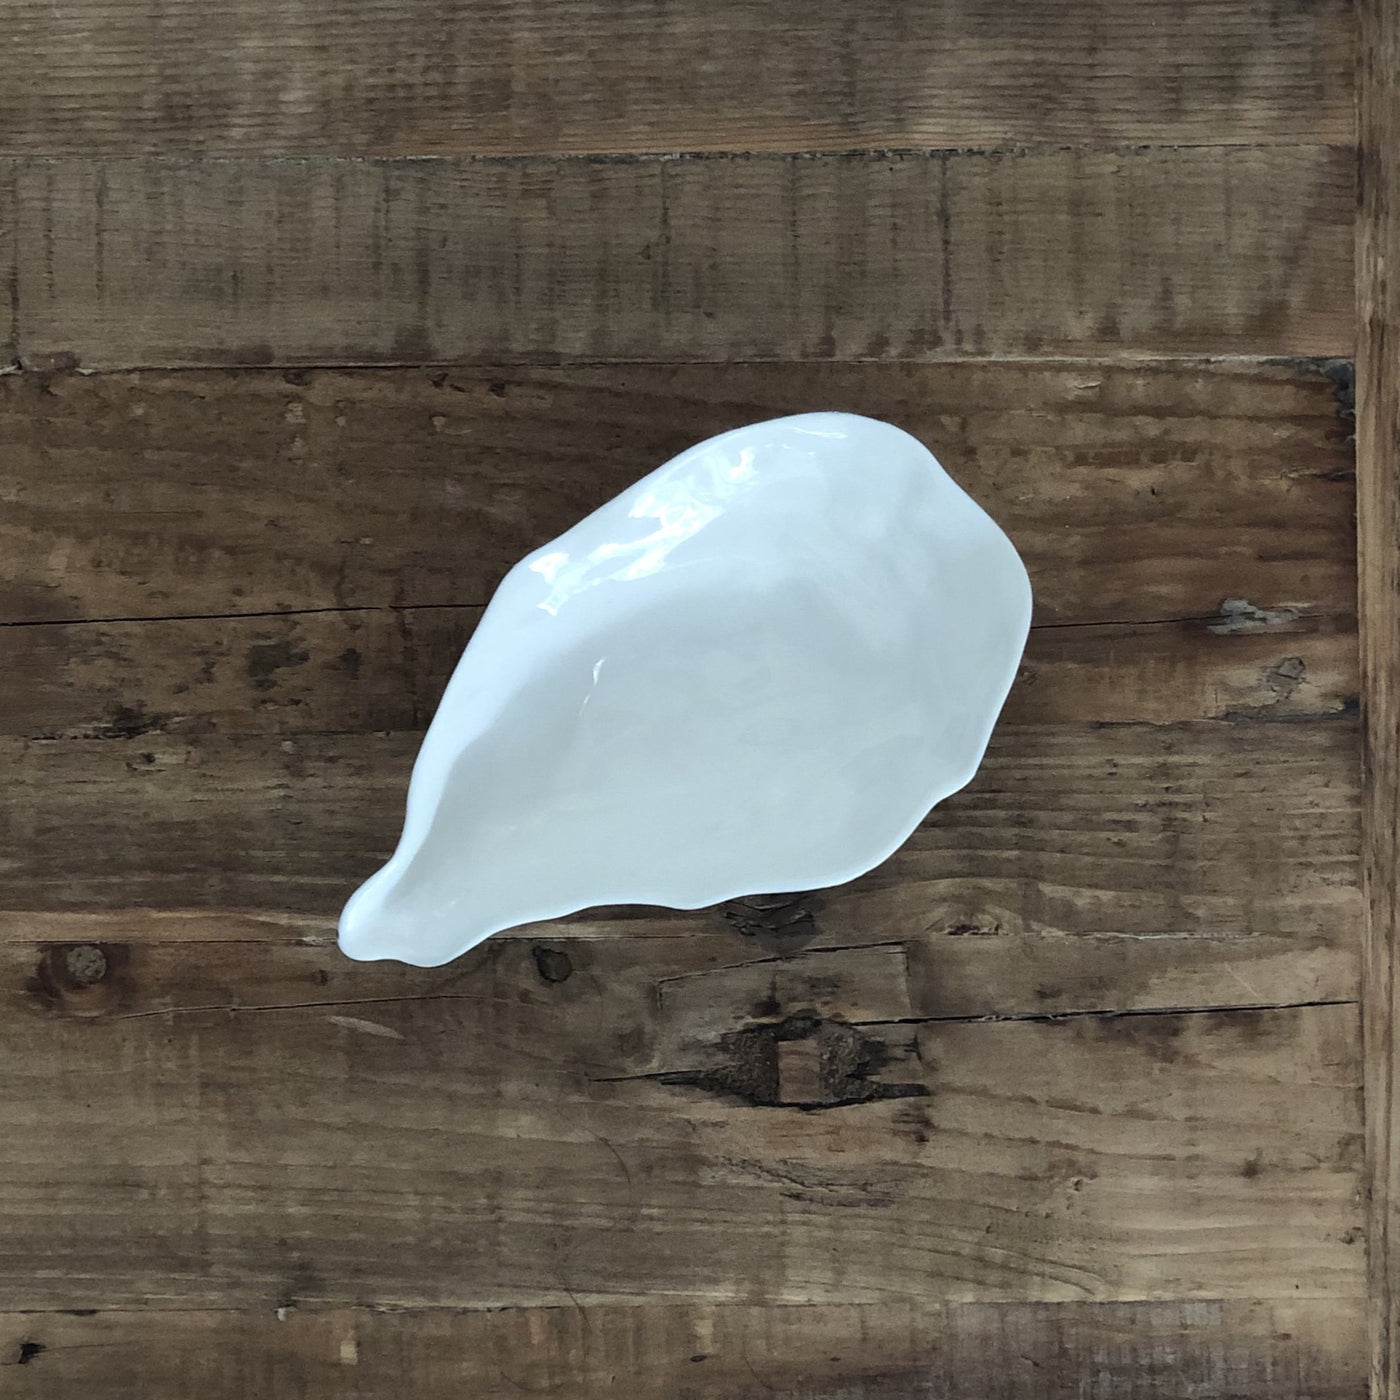 white porcelain oyster bowls